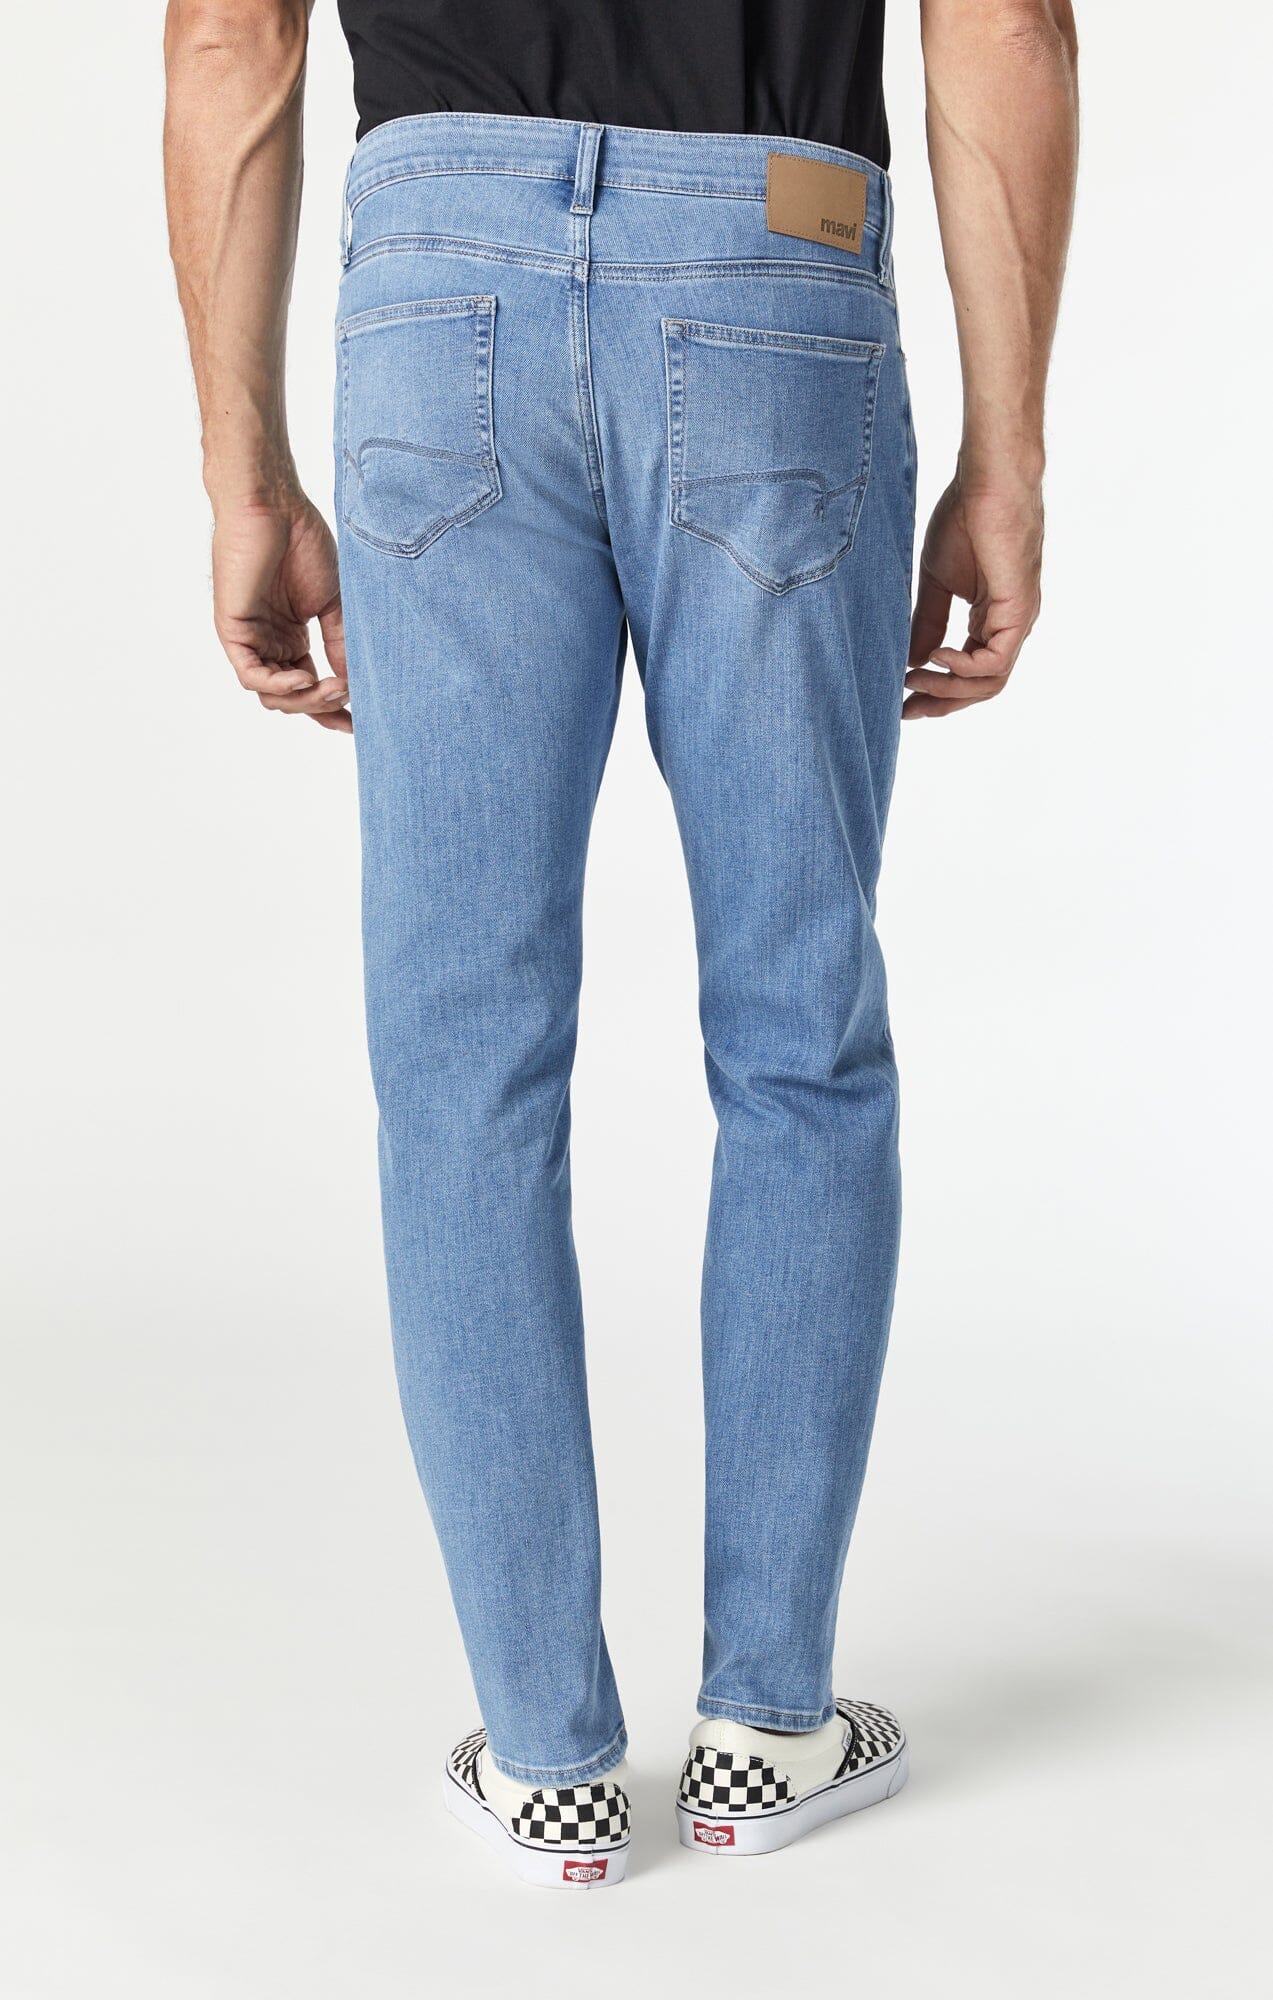 TheFound Men's Jeans Ripped Slim Fit Jeans Stretch Distressed Destroyed  Skinny Zipper Straight Leg Denim Pants Light Blue S - Walmart.com